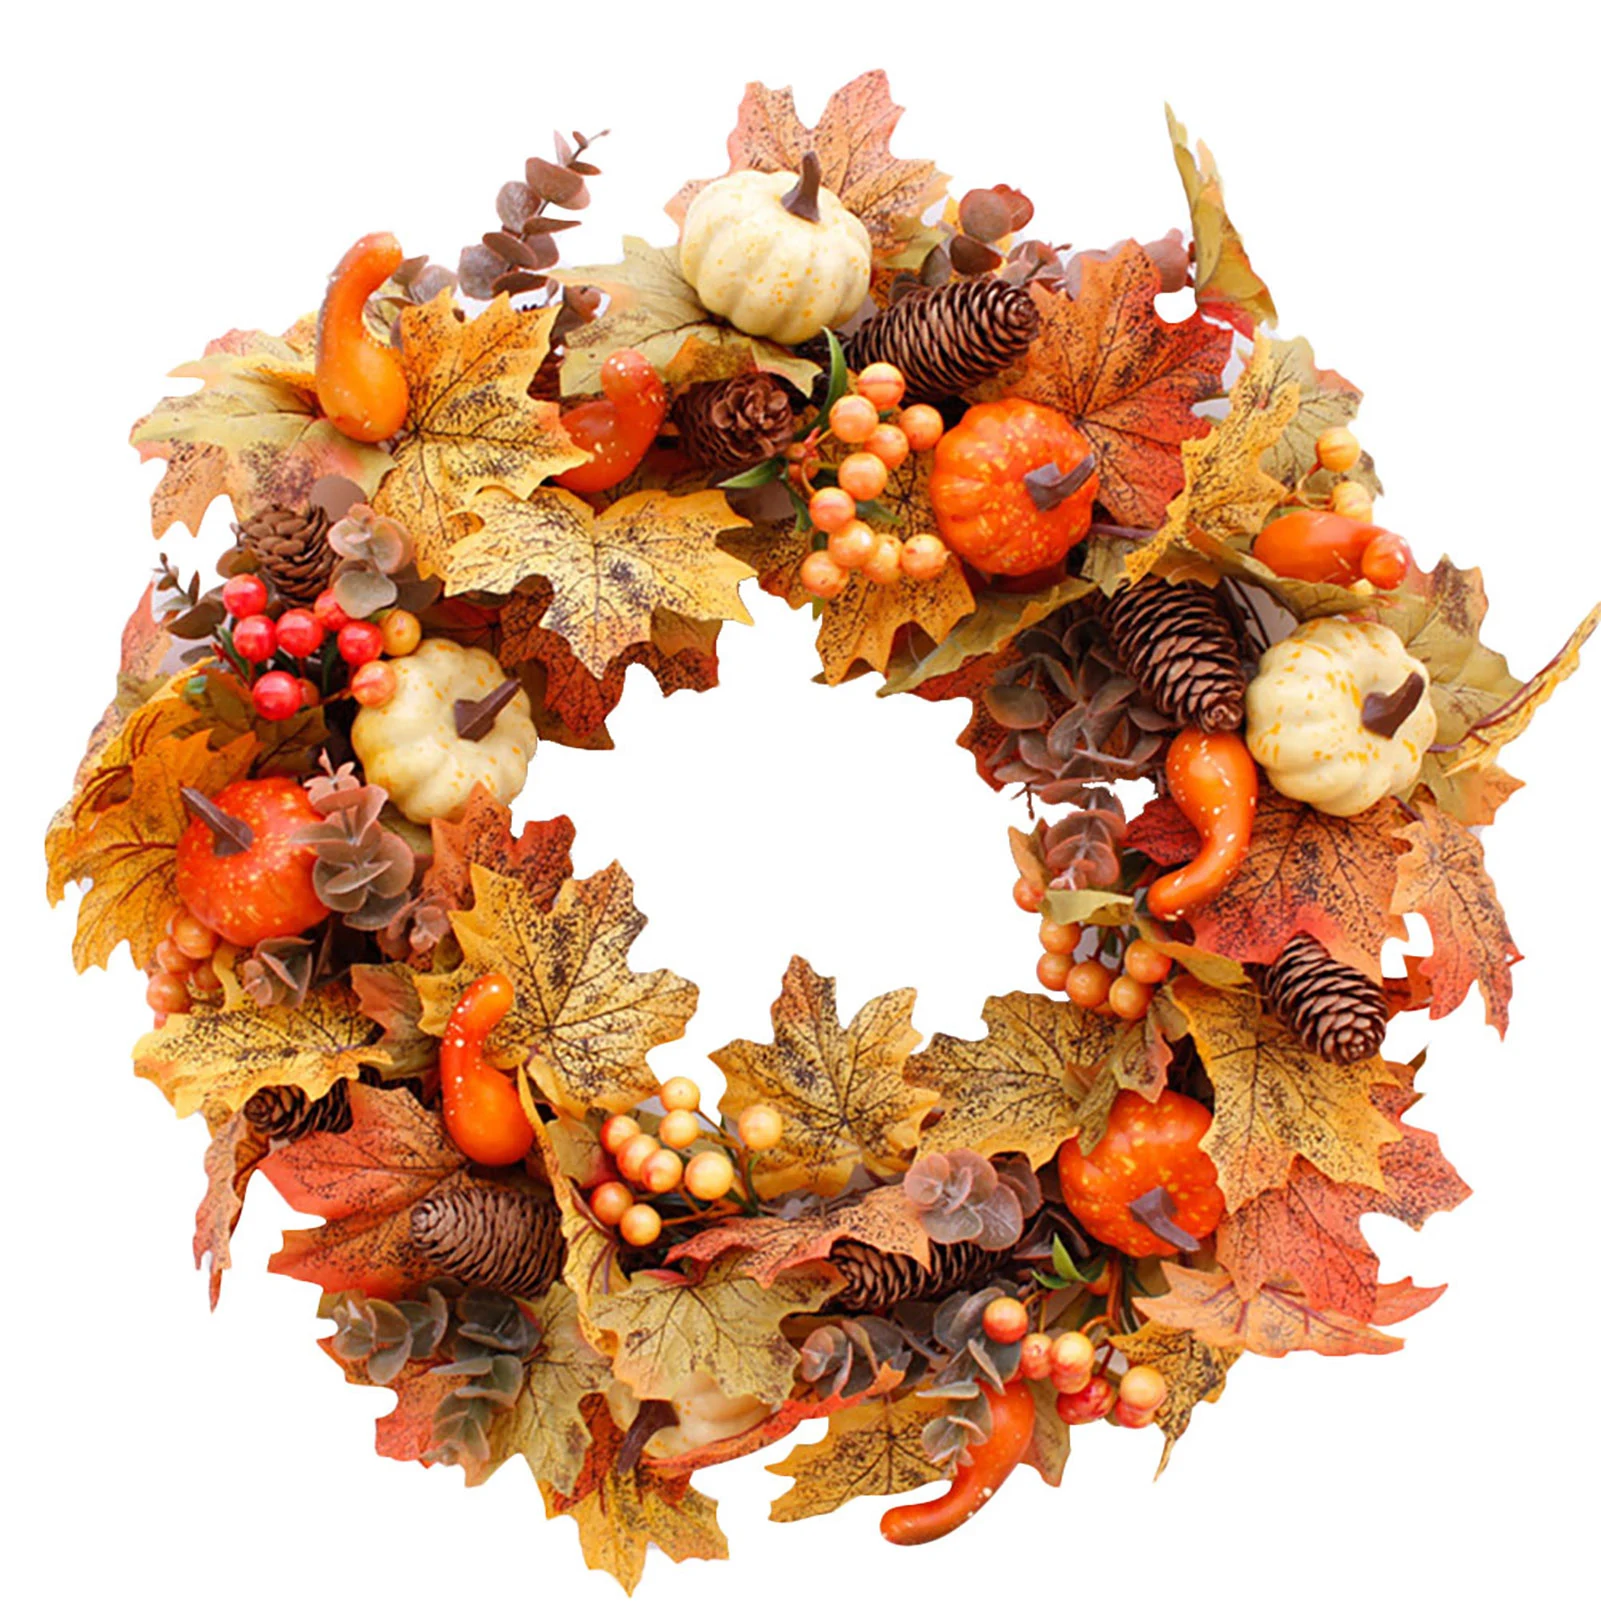 

Thanksgiving Wreath Artificial Pumpkin Wreath Lifelike Front Door Hanging Decoration Perfect For Updating Your Harvest